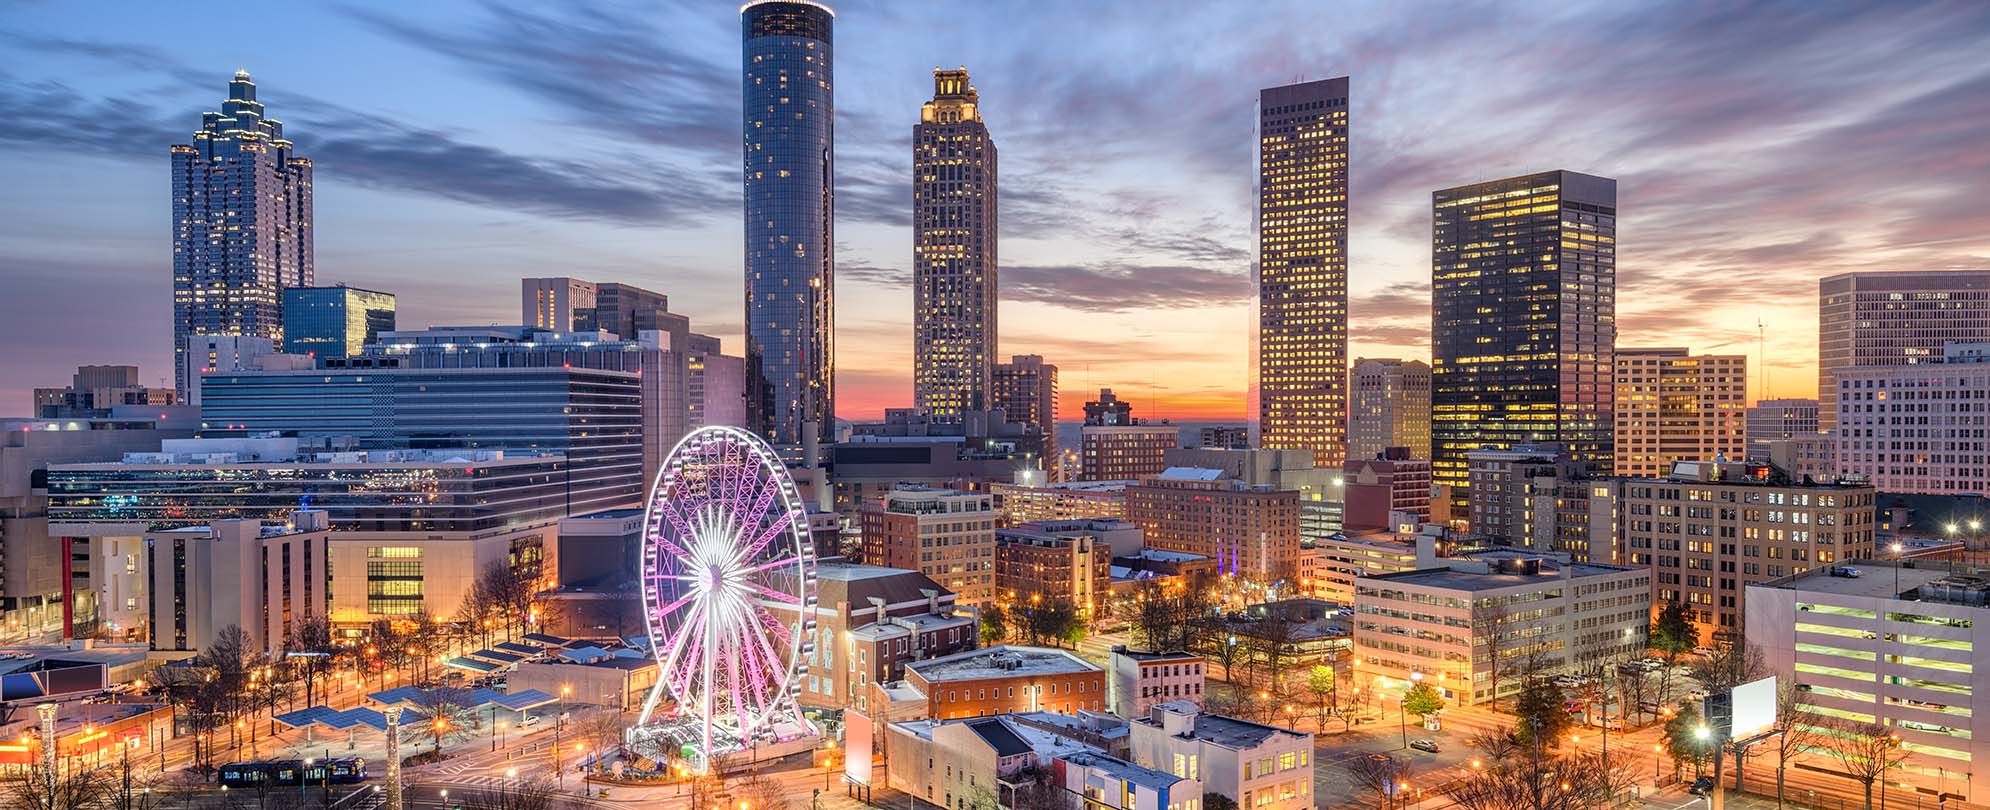 A bird's eye view of downtown Atlanta, Georgia, lit up at night.